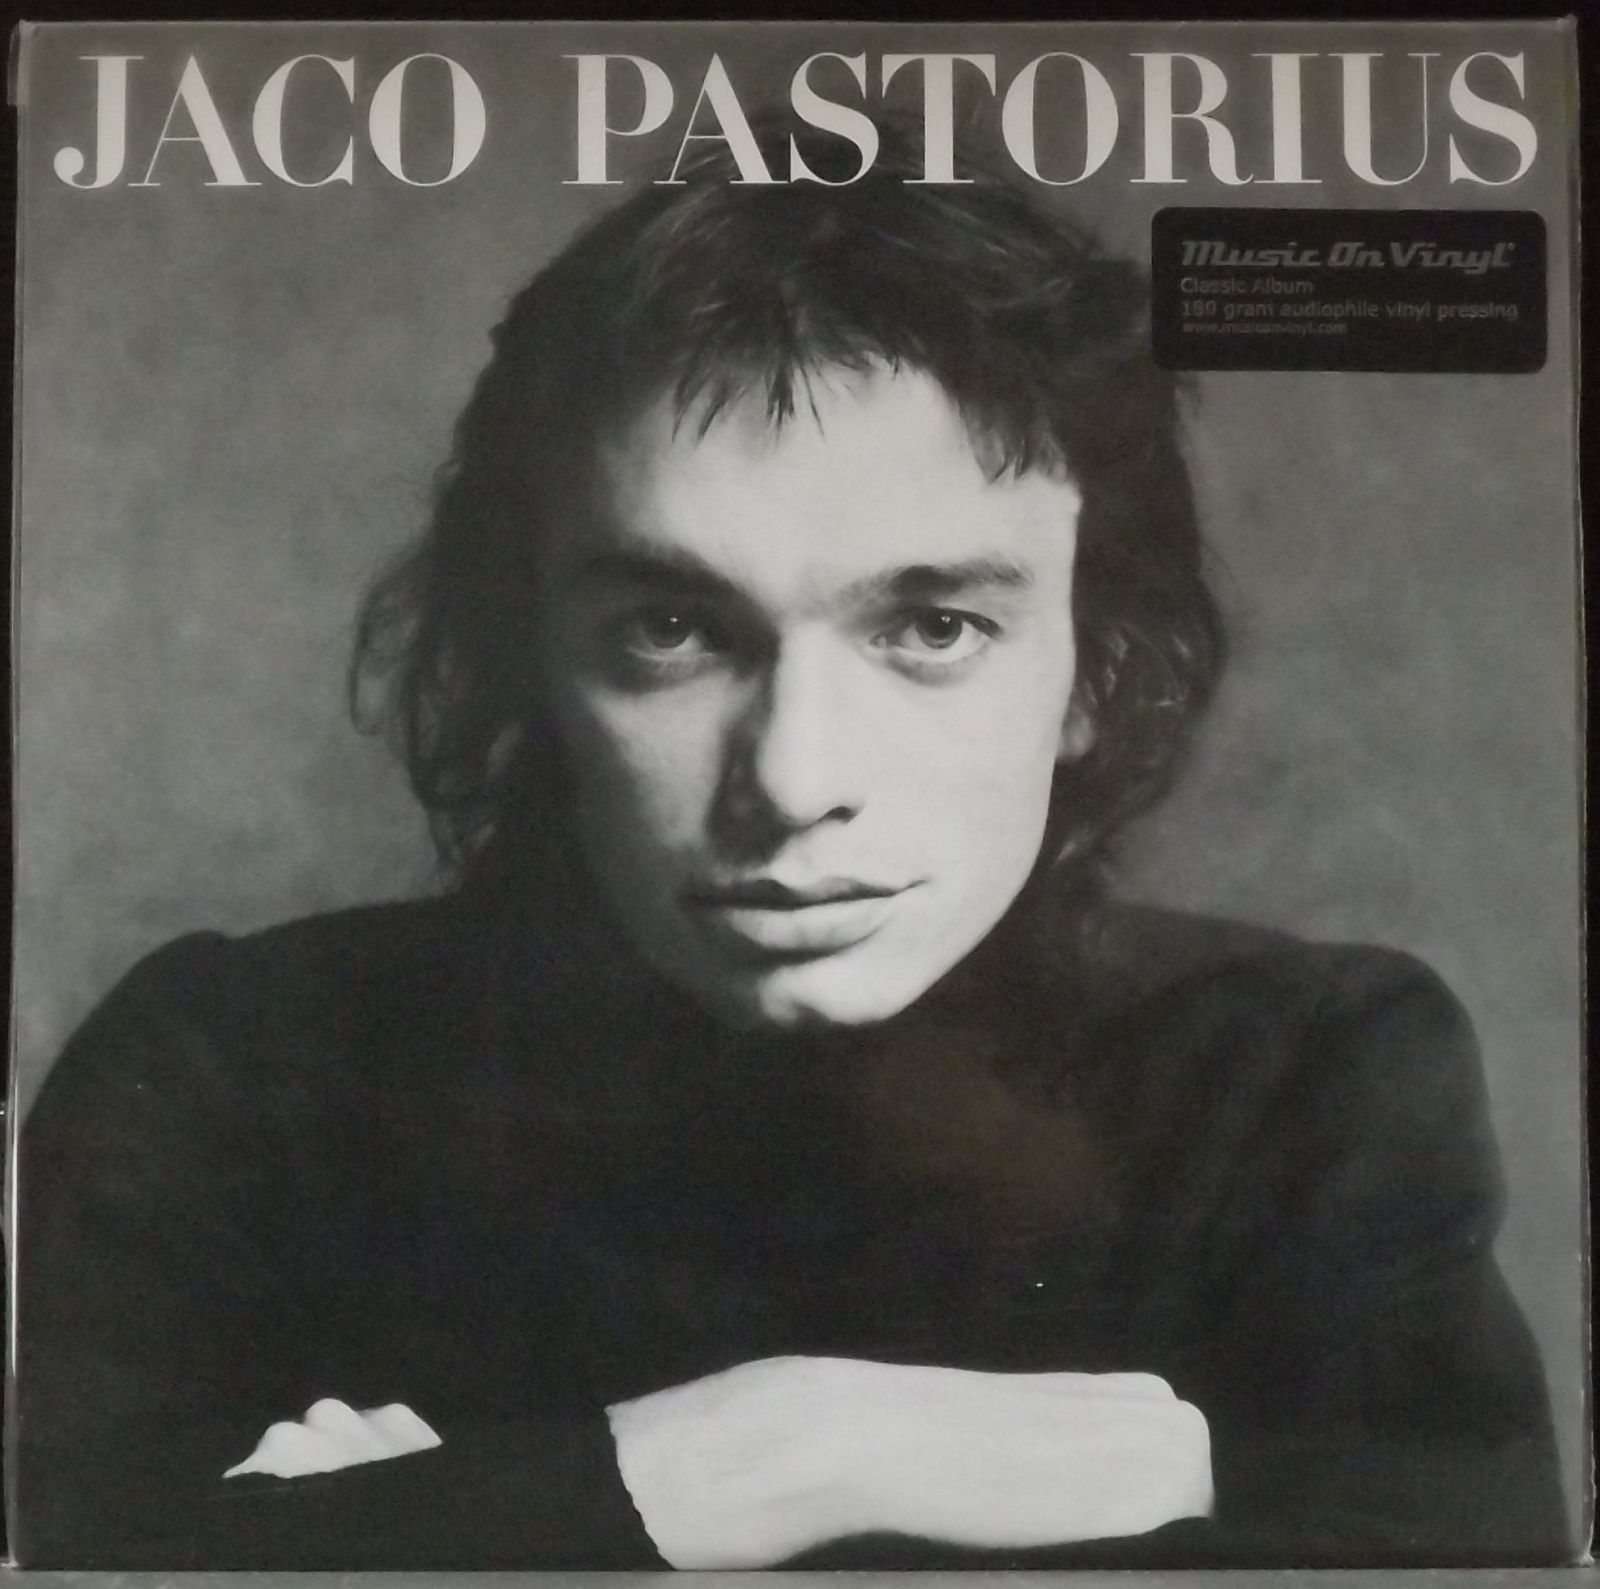 Виниловая пластинка Pastorius, Jaco, Jaco Pastorius (8713748980467) виниловая пластинка jaco pastorius word of mouth